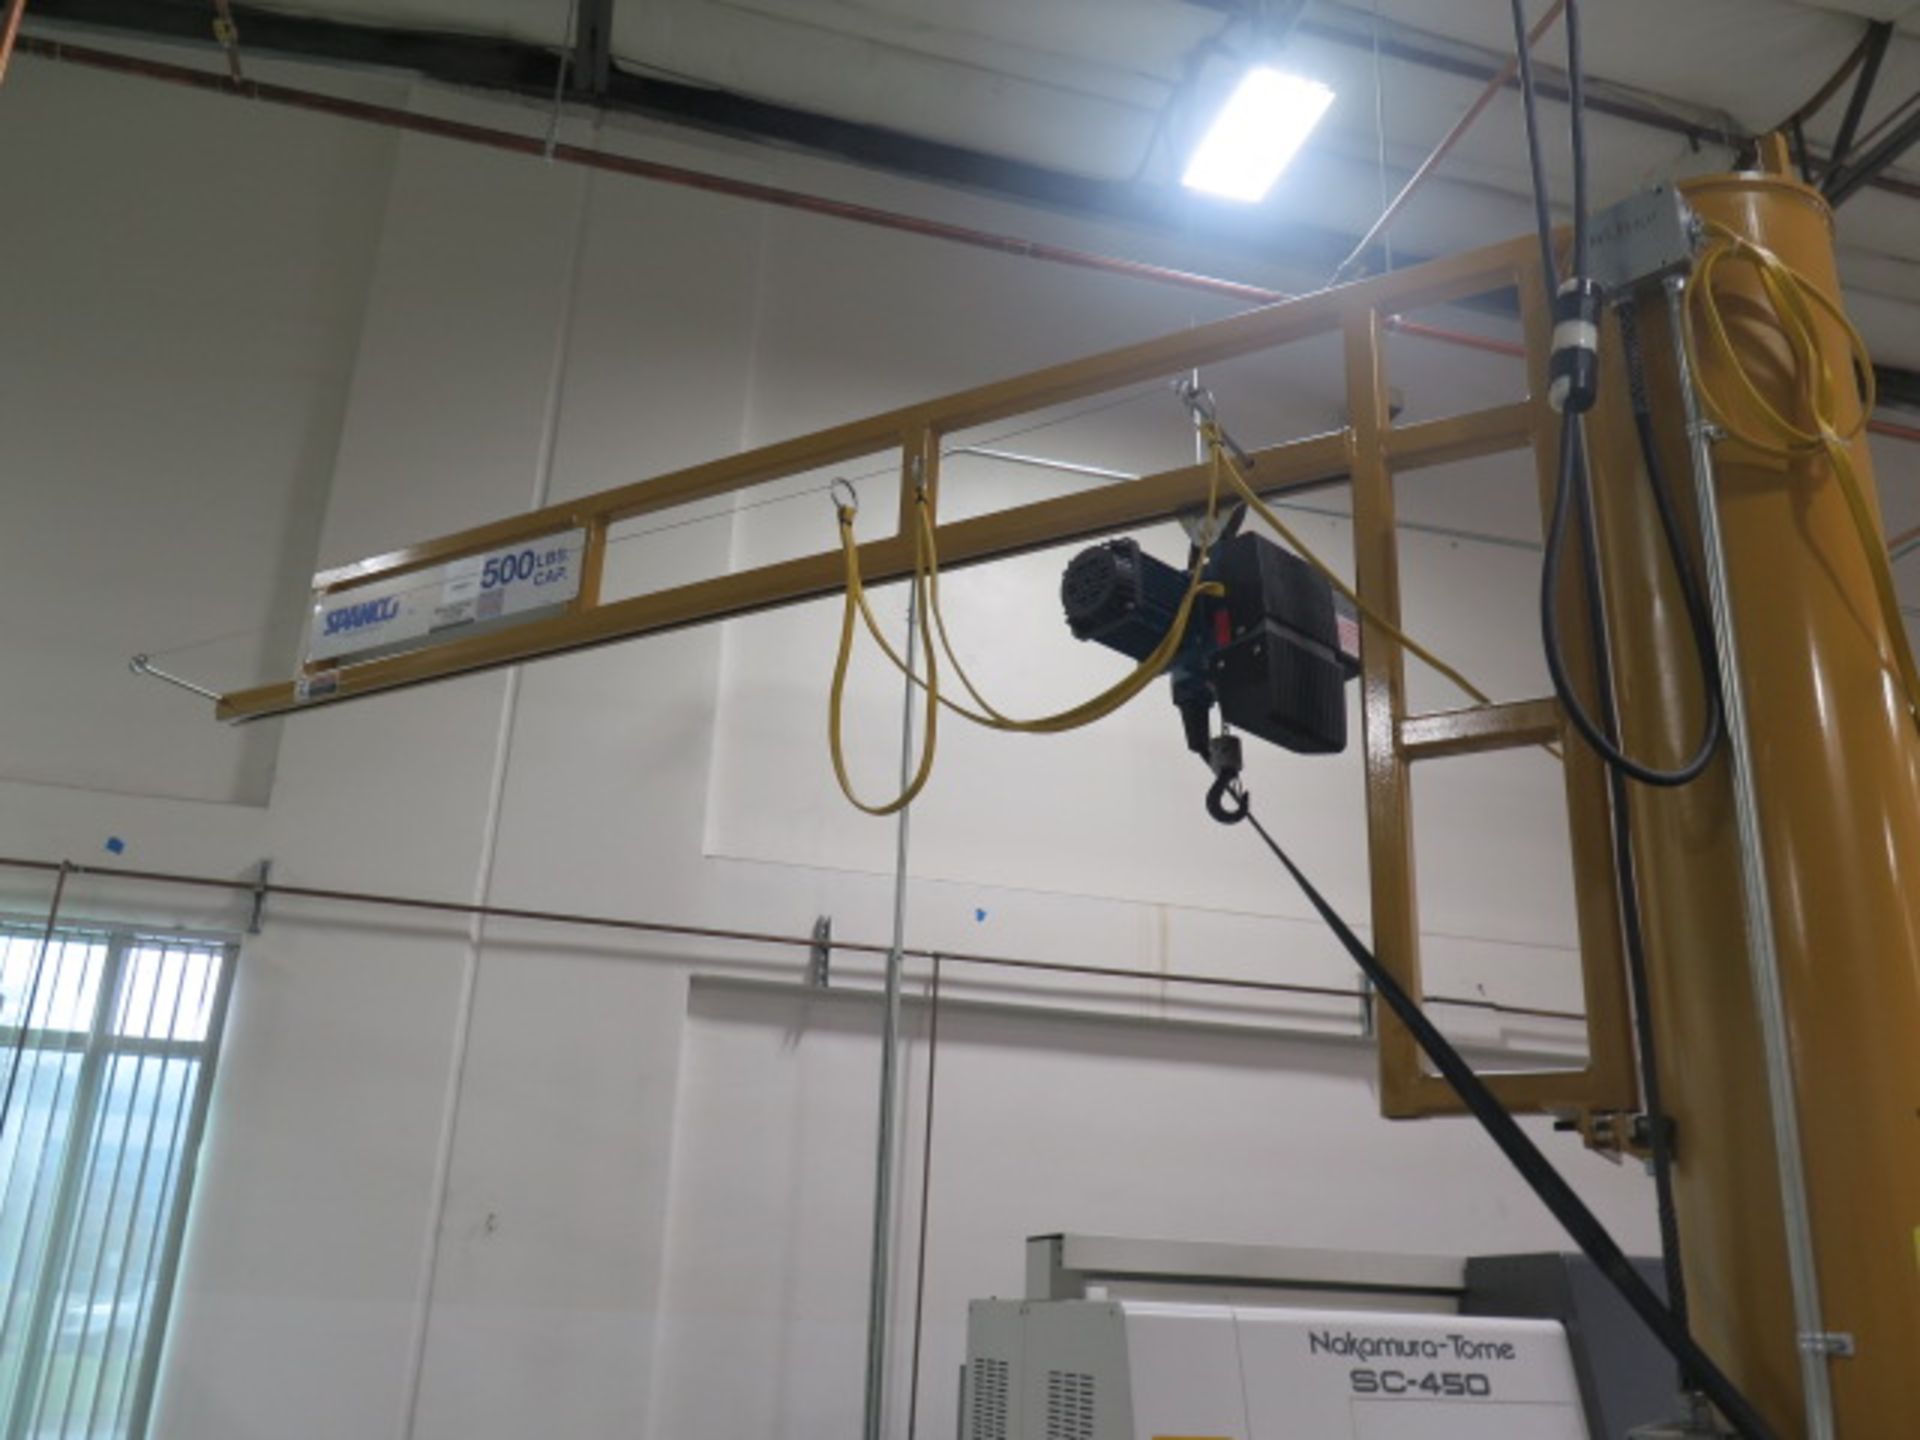 Spanco 500 Lb Cap Floor Mounted Jib Hoist w/ Demag Electric Hoist - Image 2 of 5